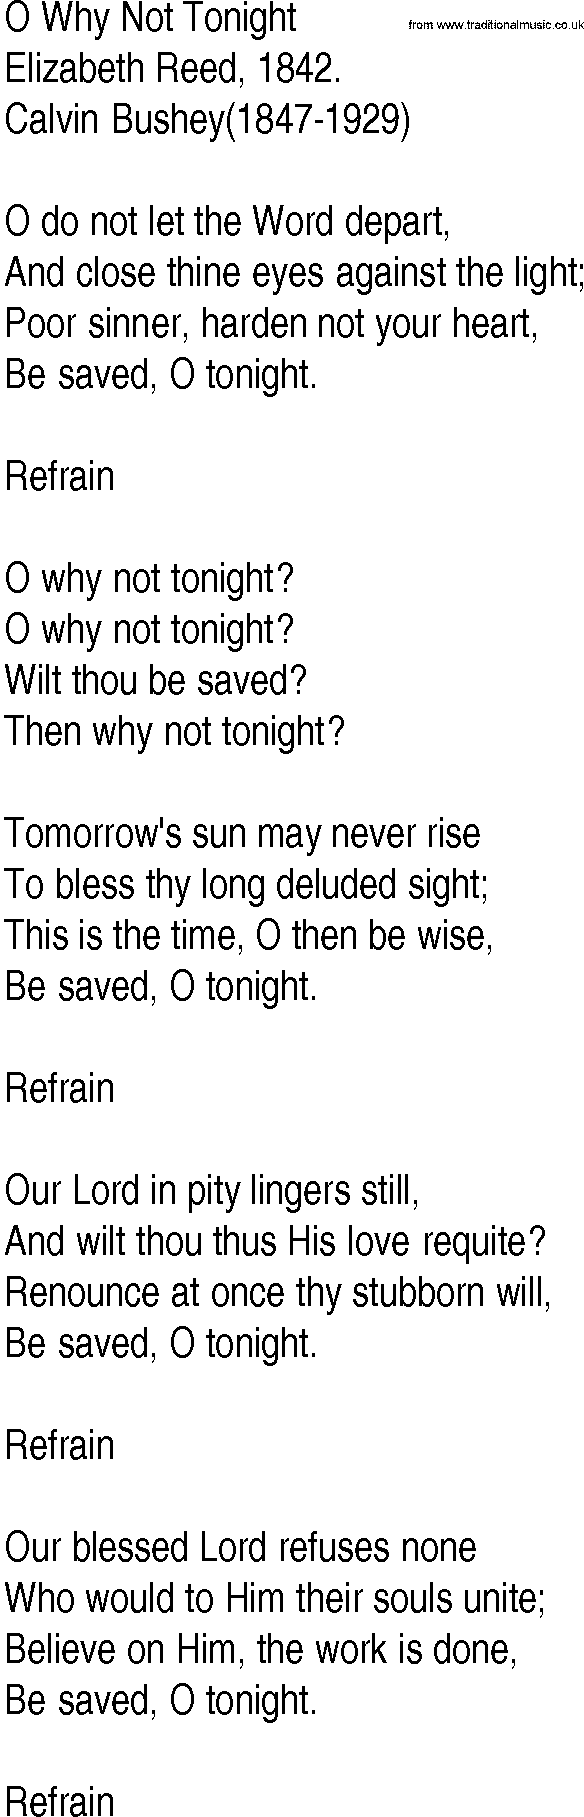 Hymn and Gospel Song: O Why Not Tonight by Elizabeth Reed lyrics